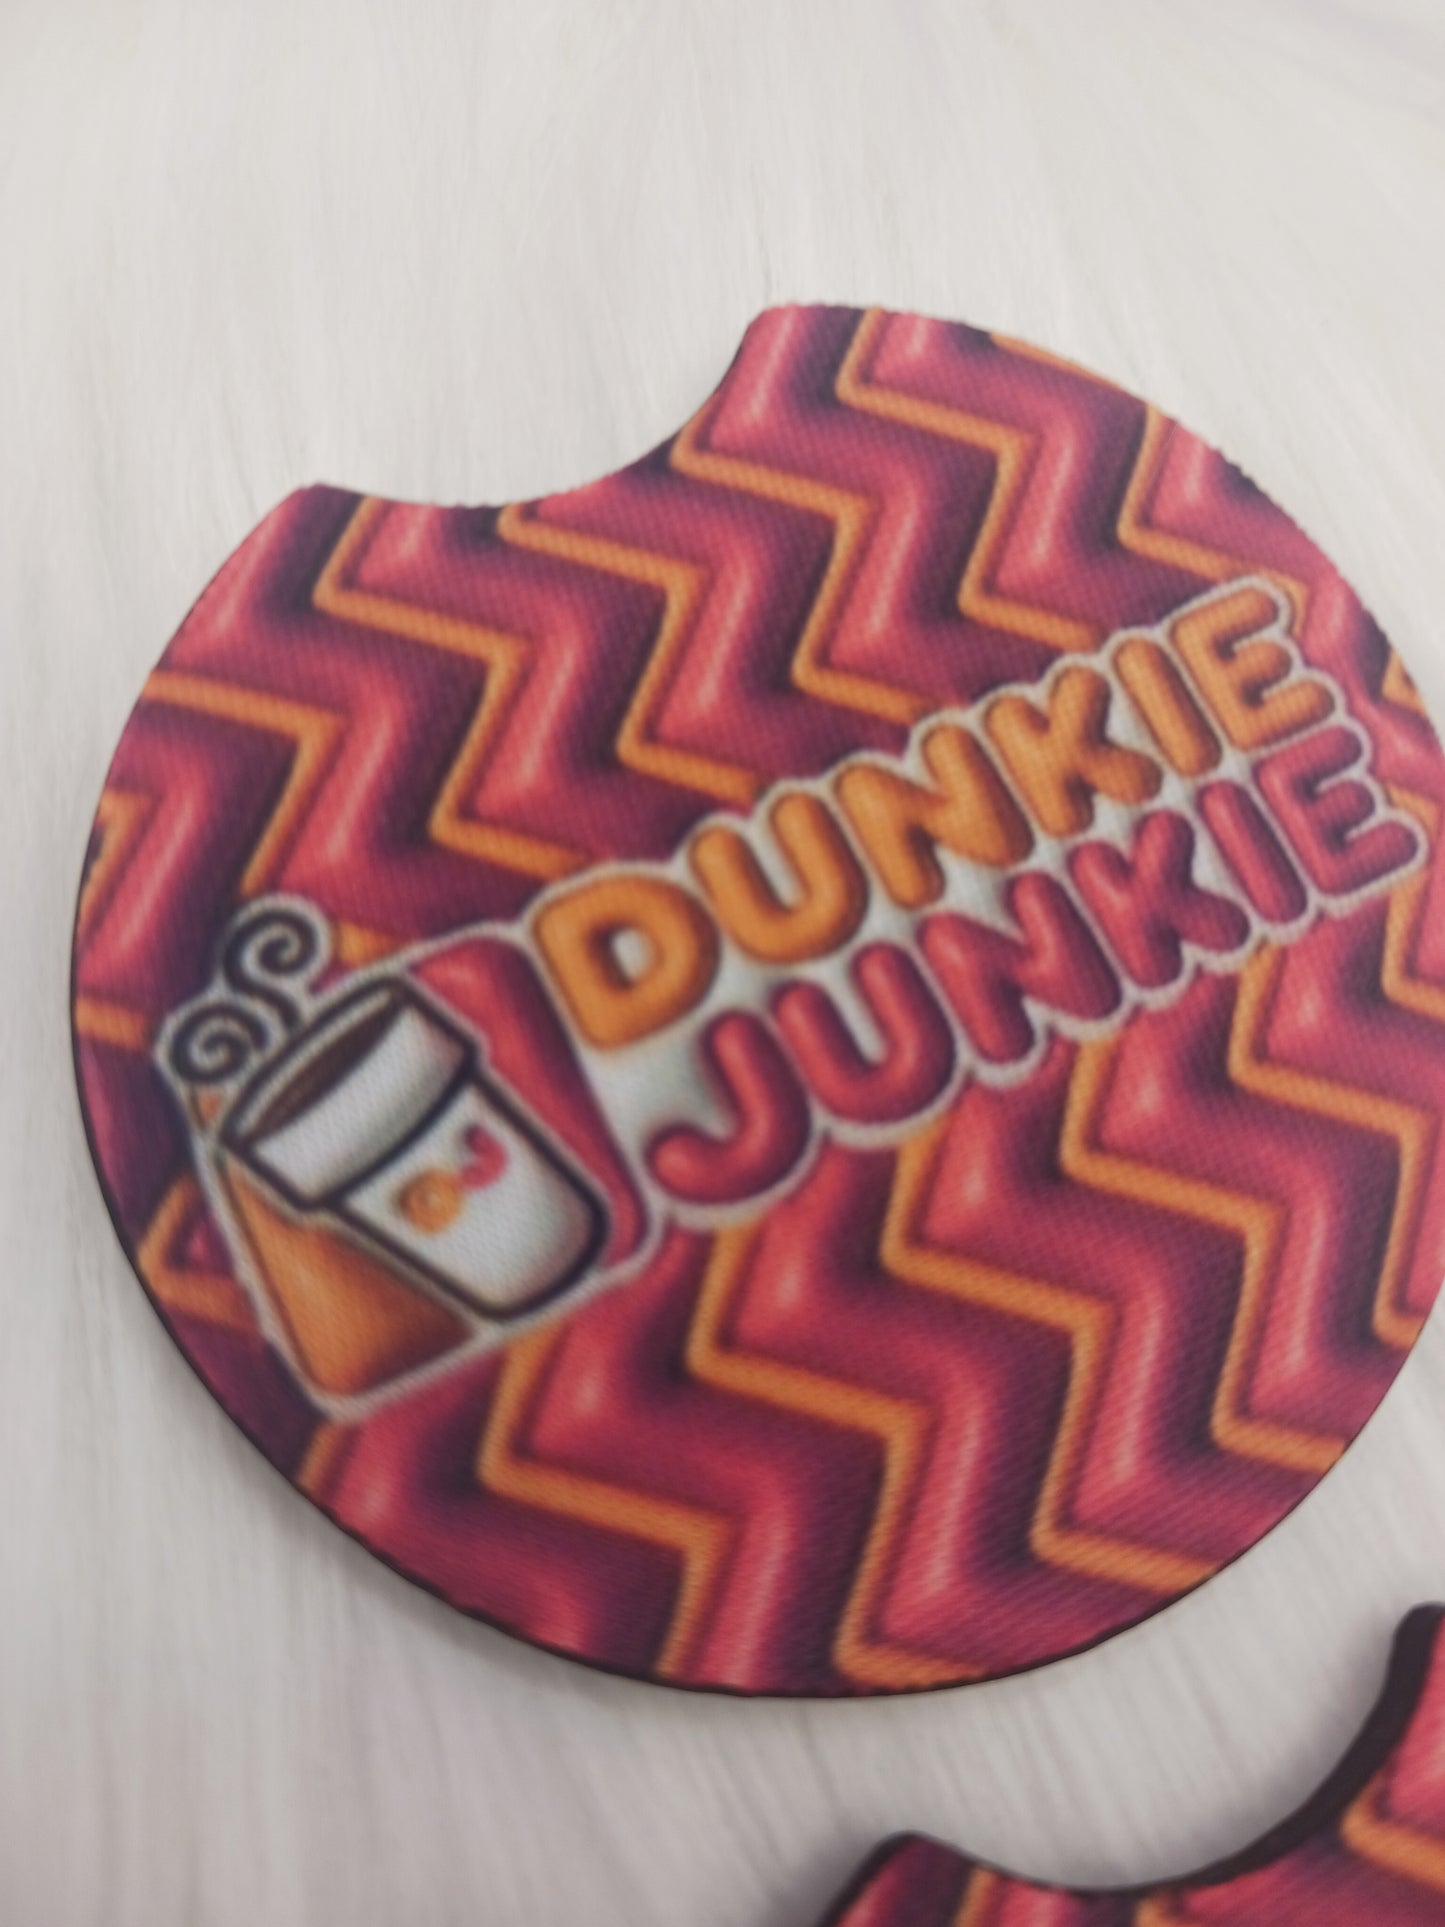 Coffee junkie car coasters